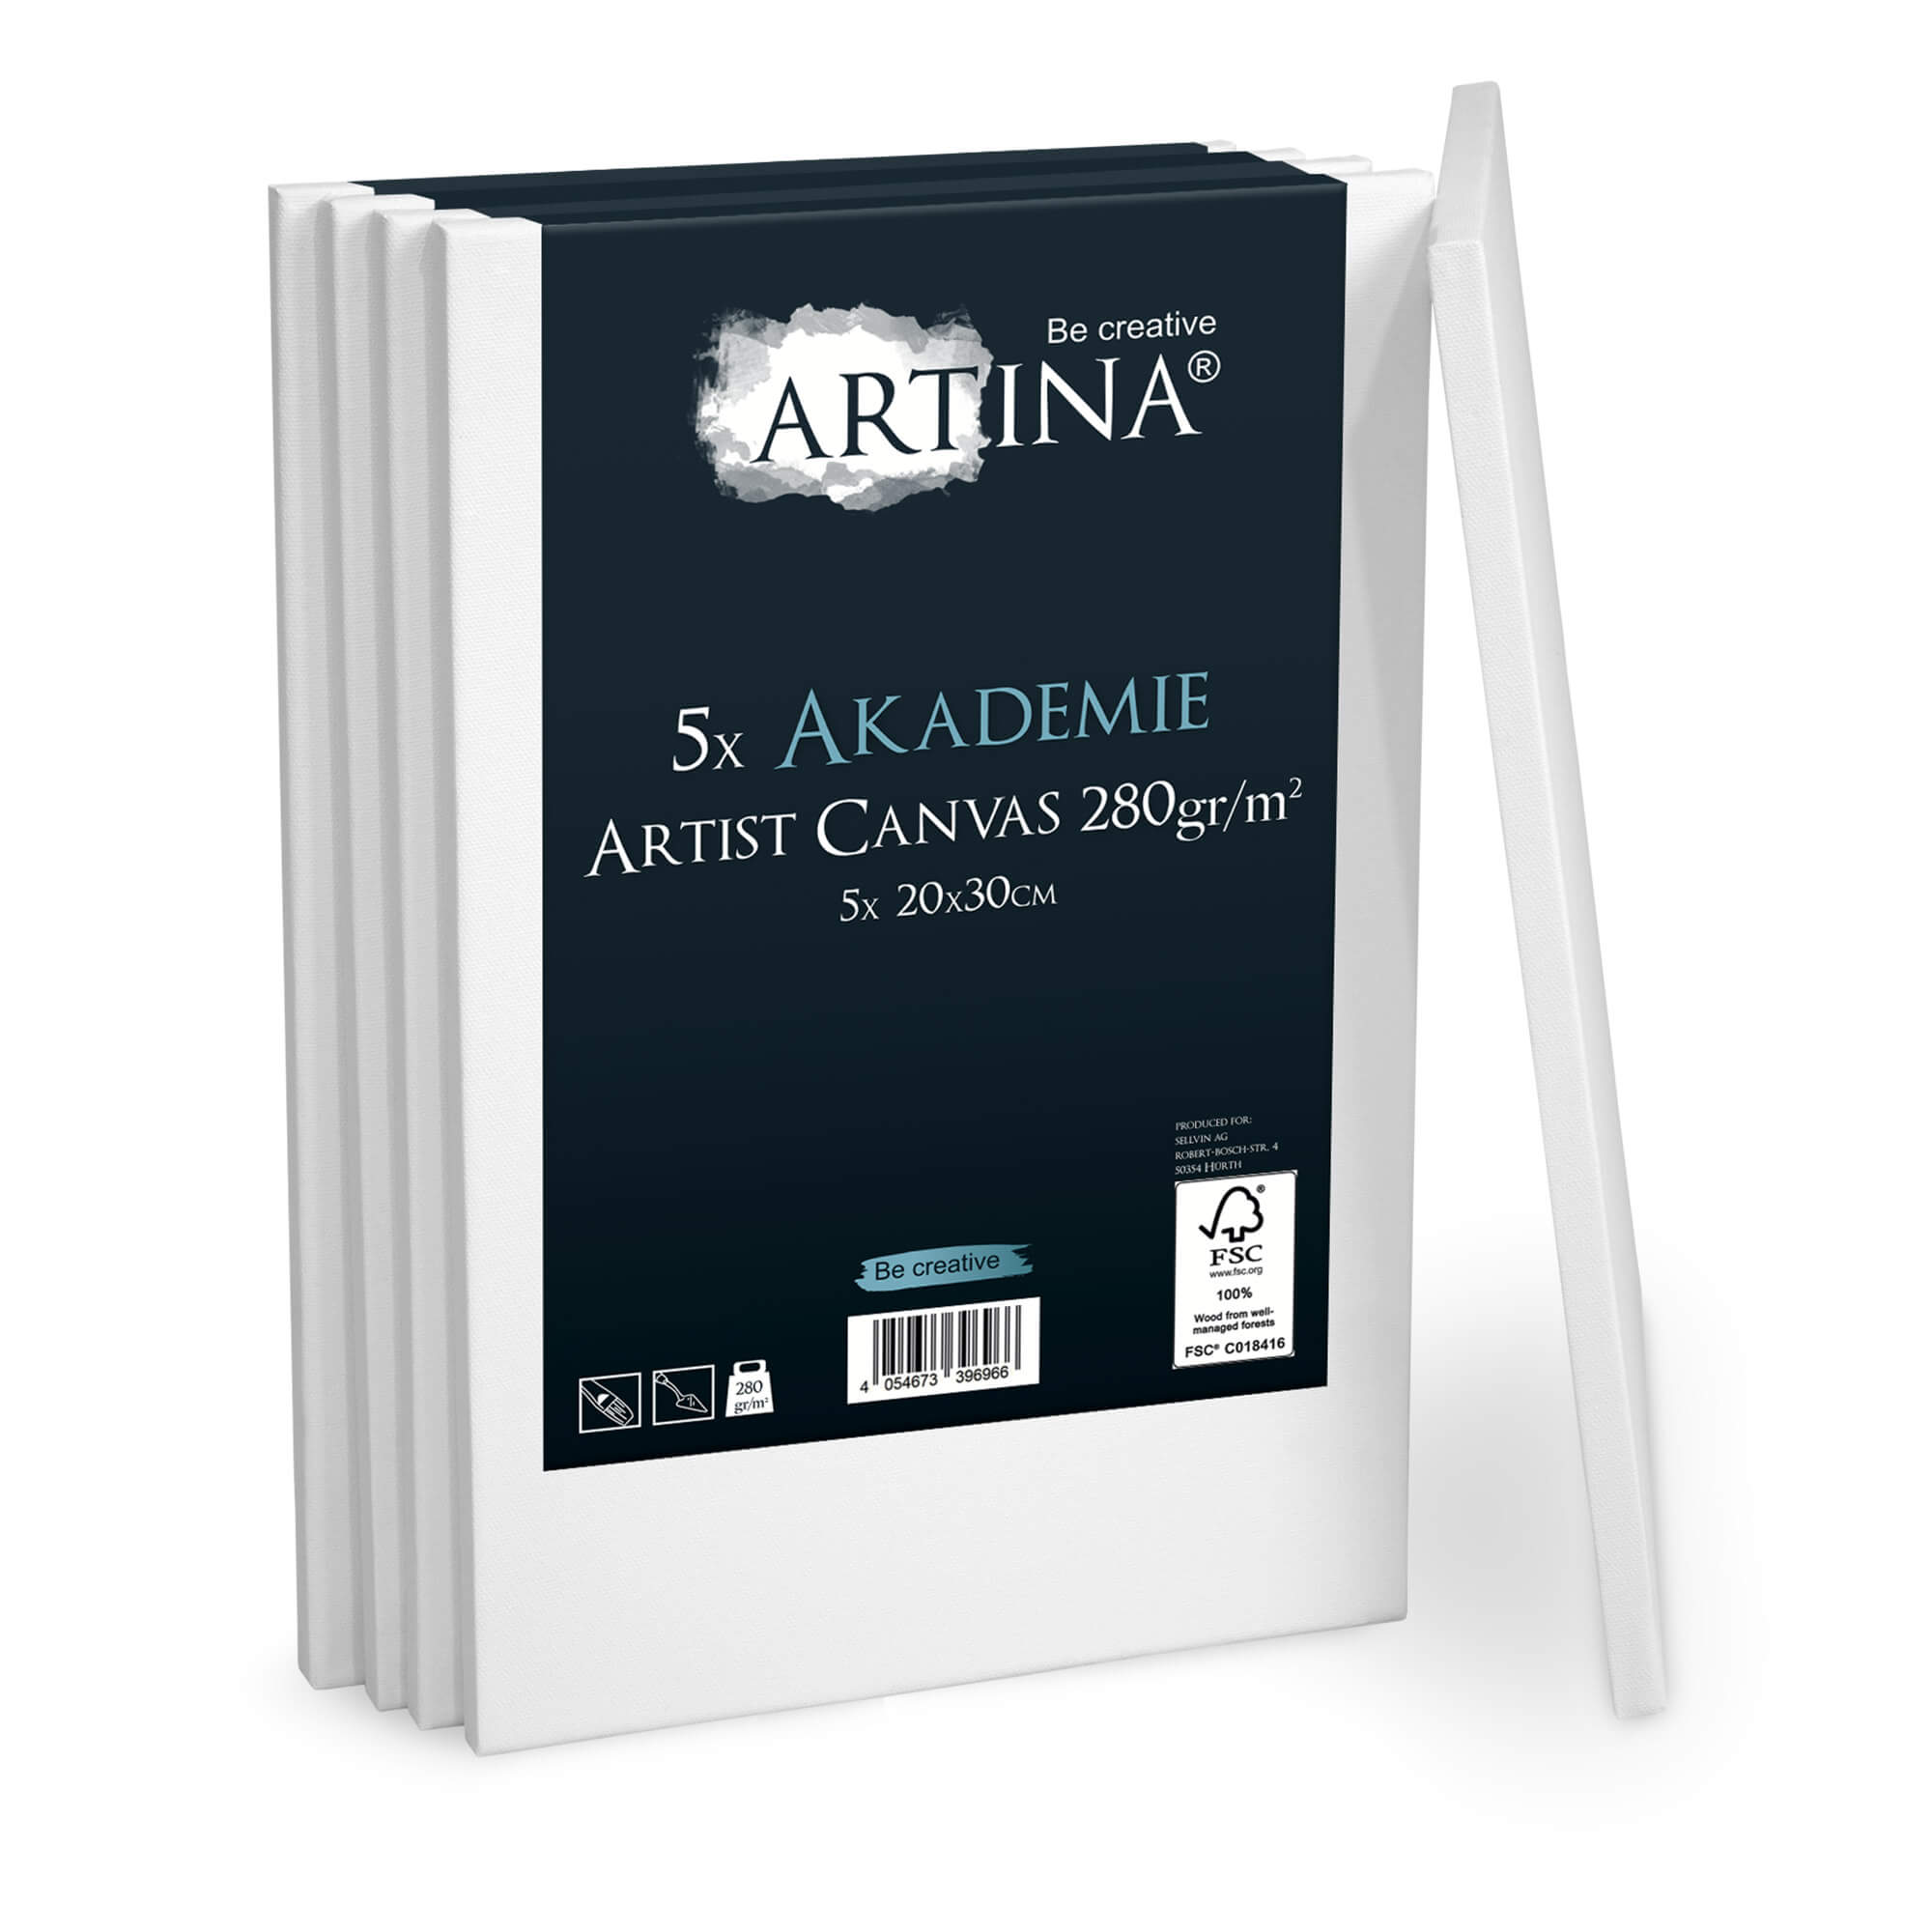 Artina 5er Set Keilrahmen 20x30cm in Akademie Qualität 5 Stück